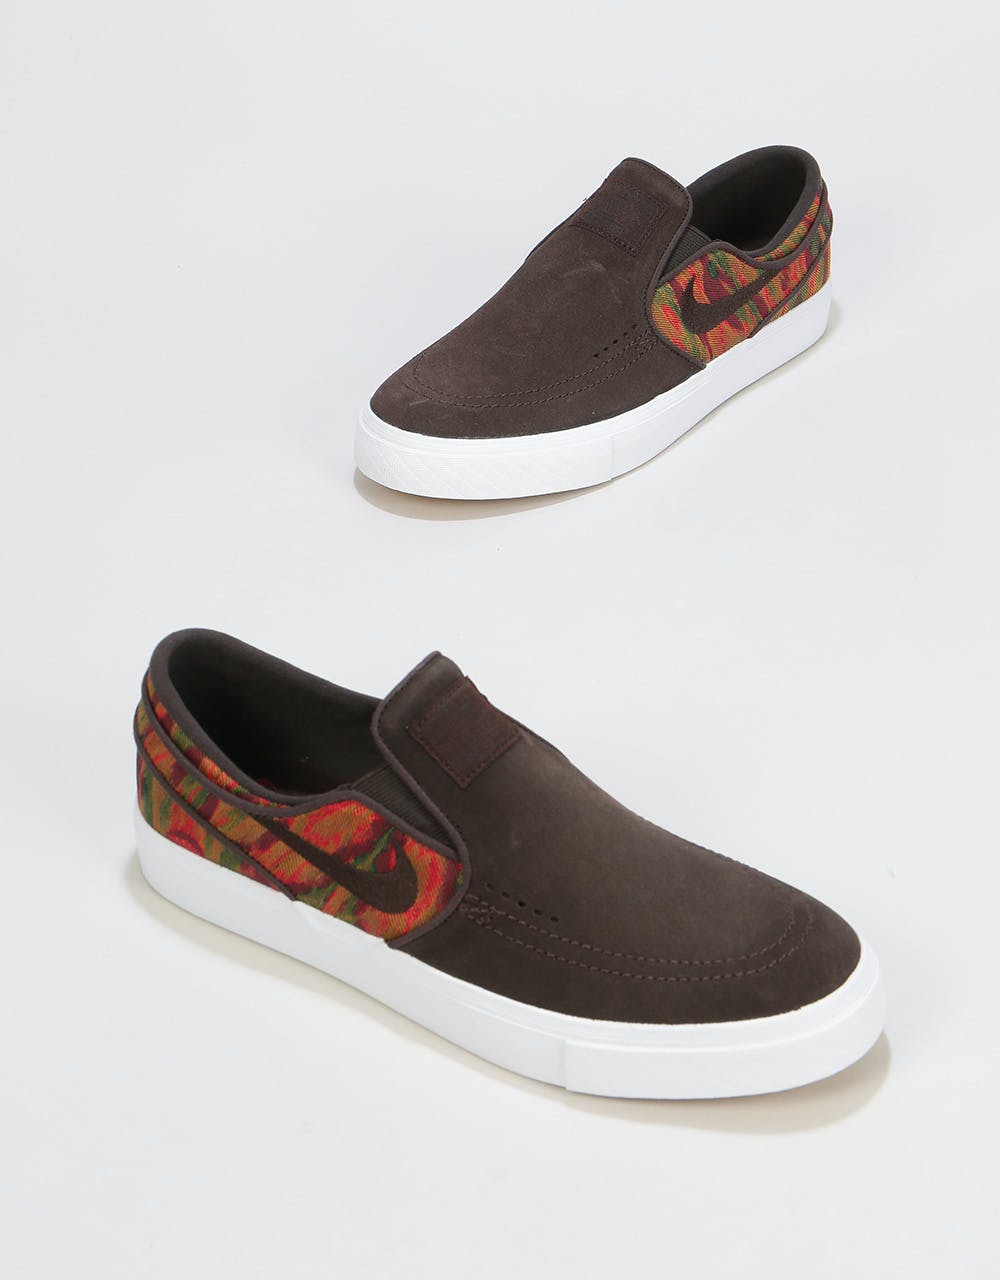 Nike SB Zoom Stefan Janoski Slip Premium Skate Shoes - Velvet Brown